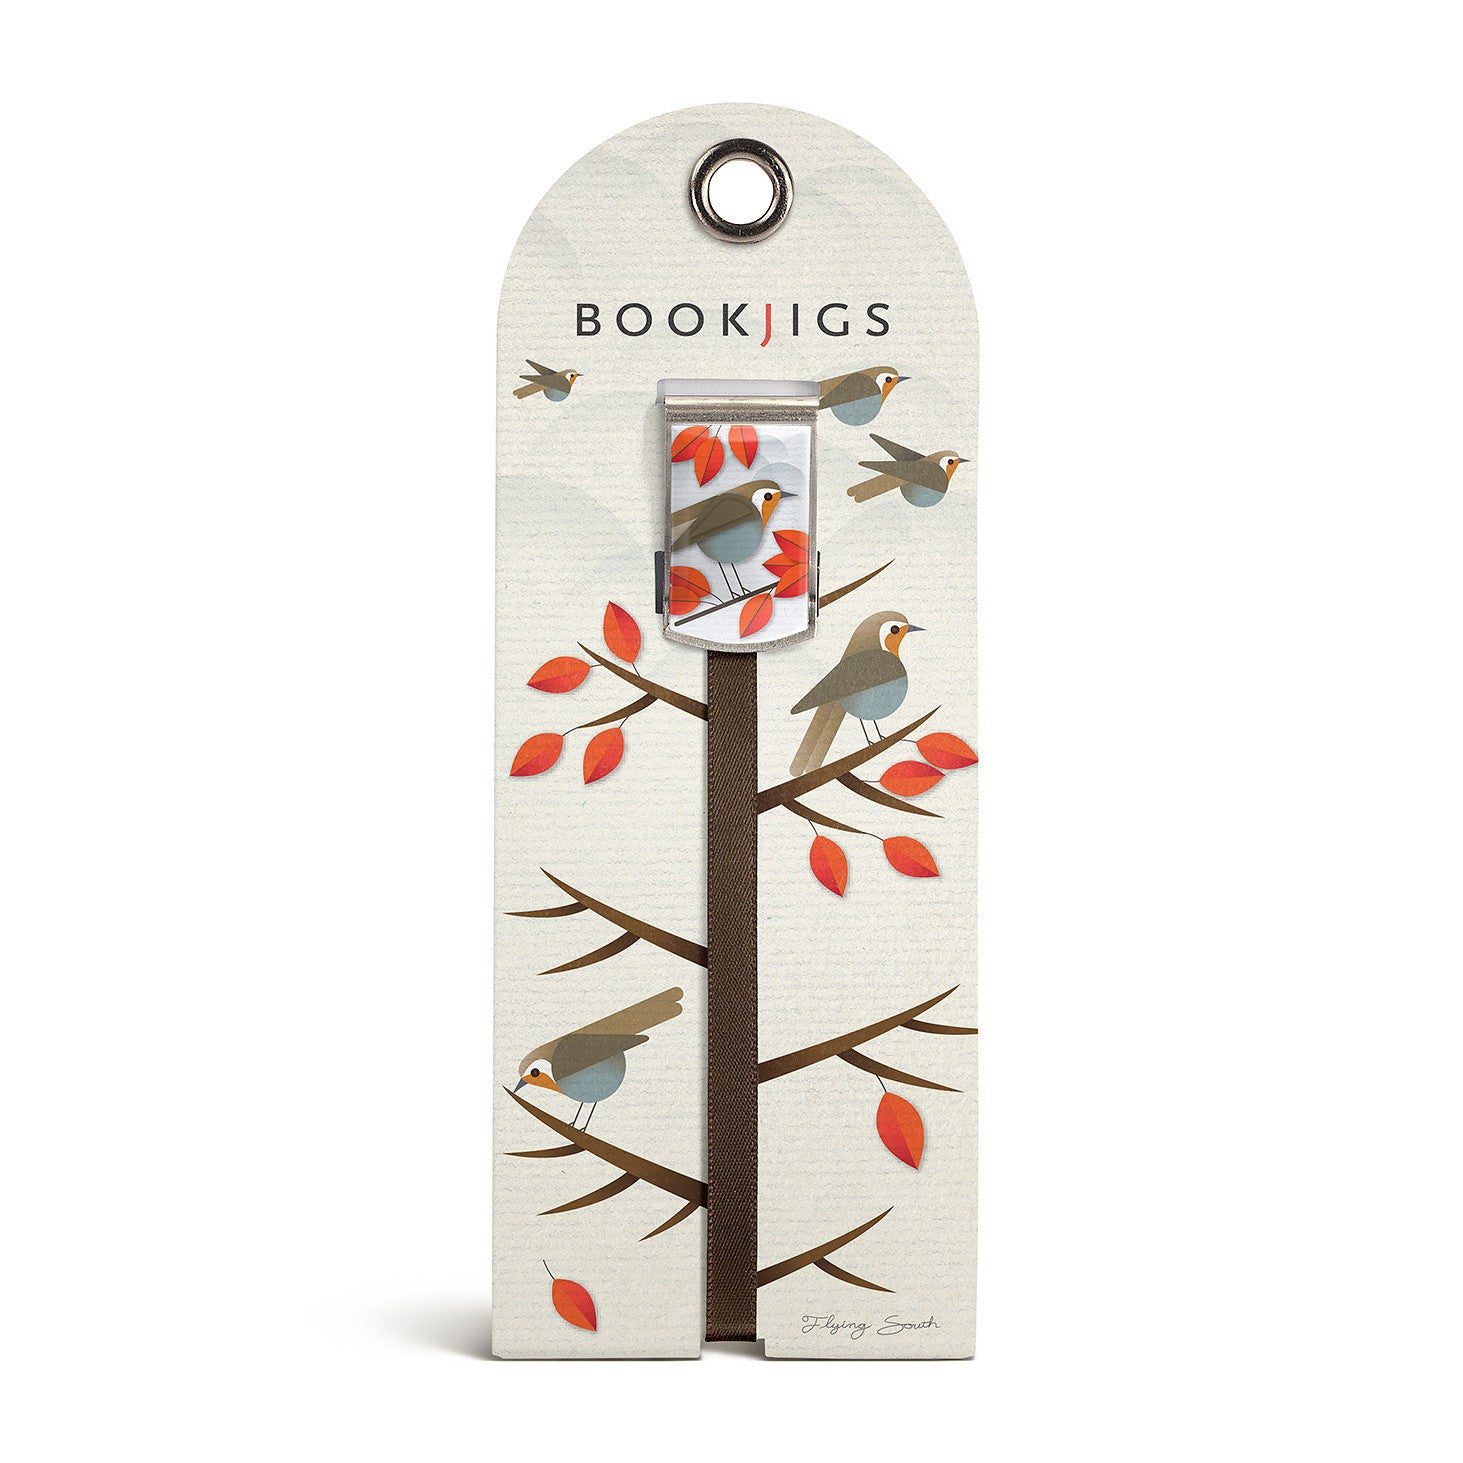 bookjigs bookmark birds flying south